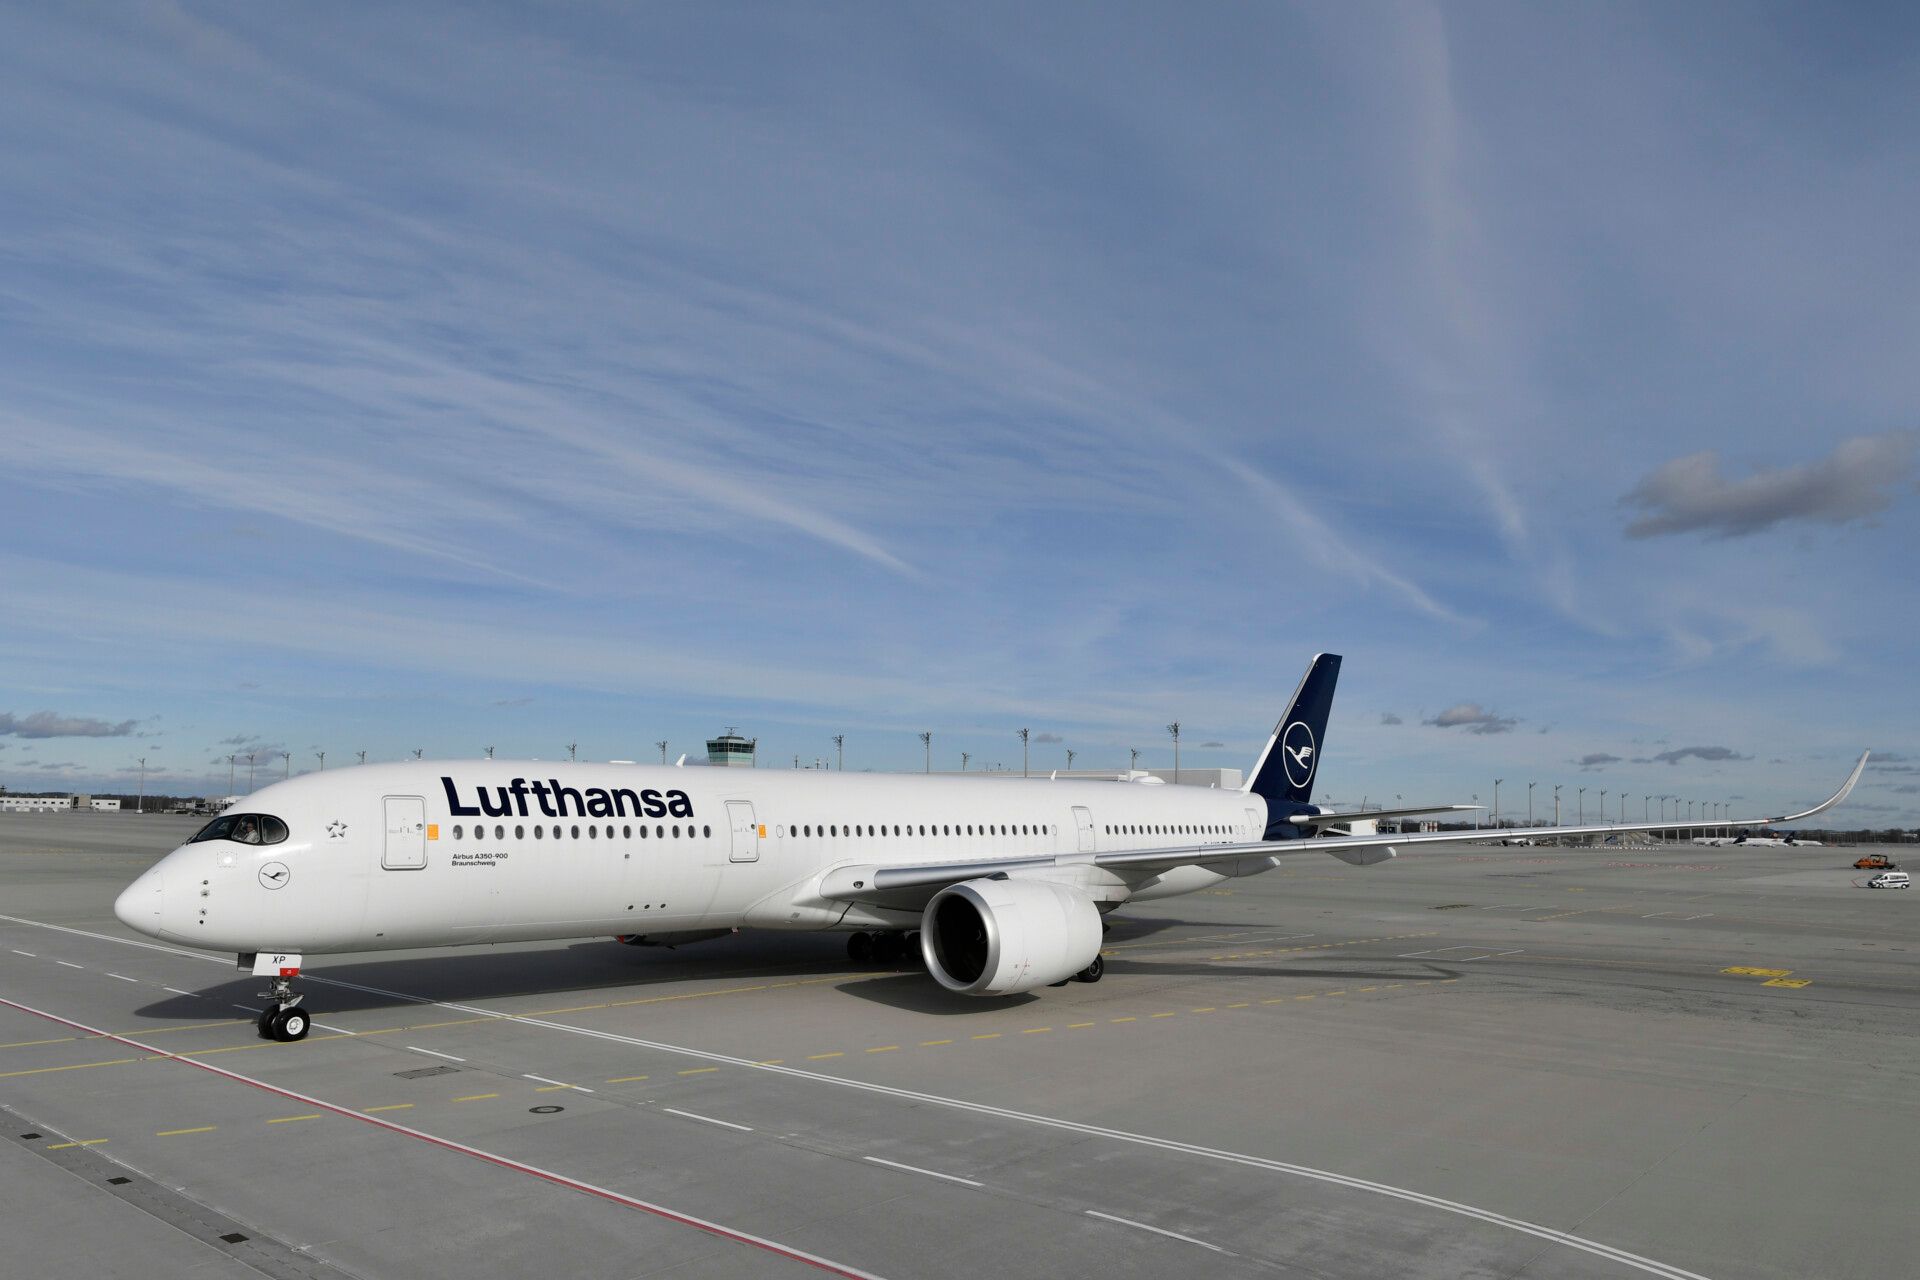 Lufthansa a350